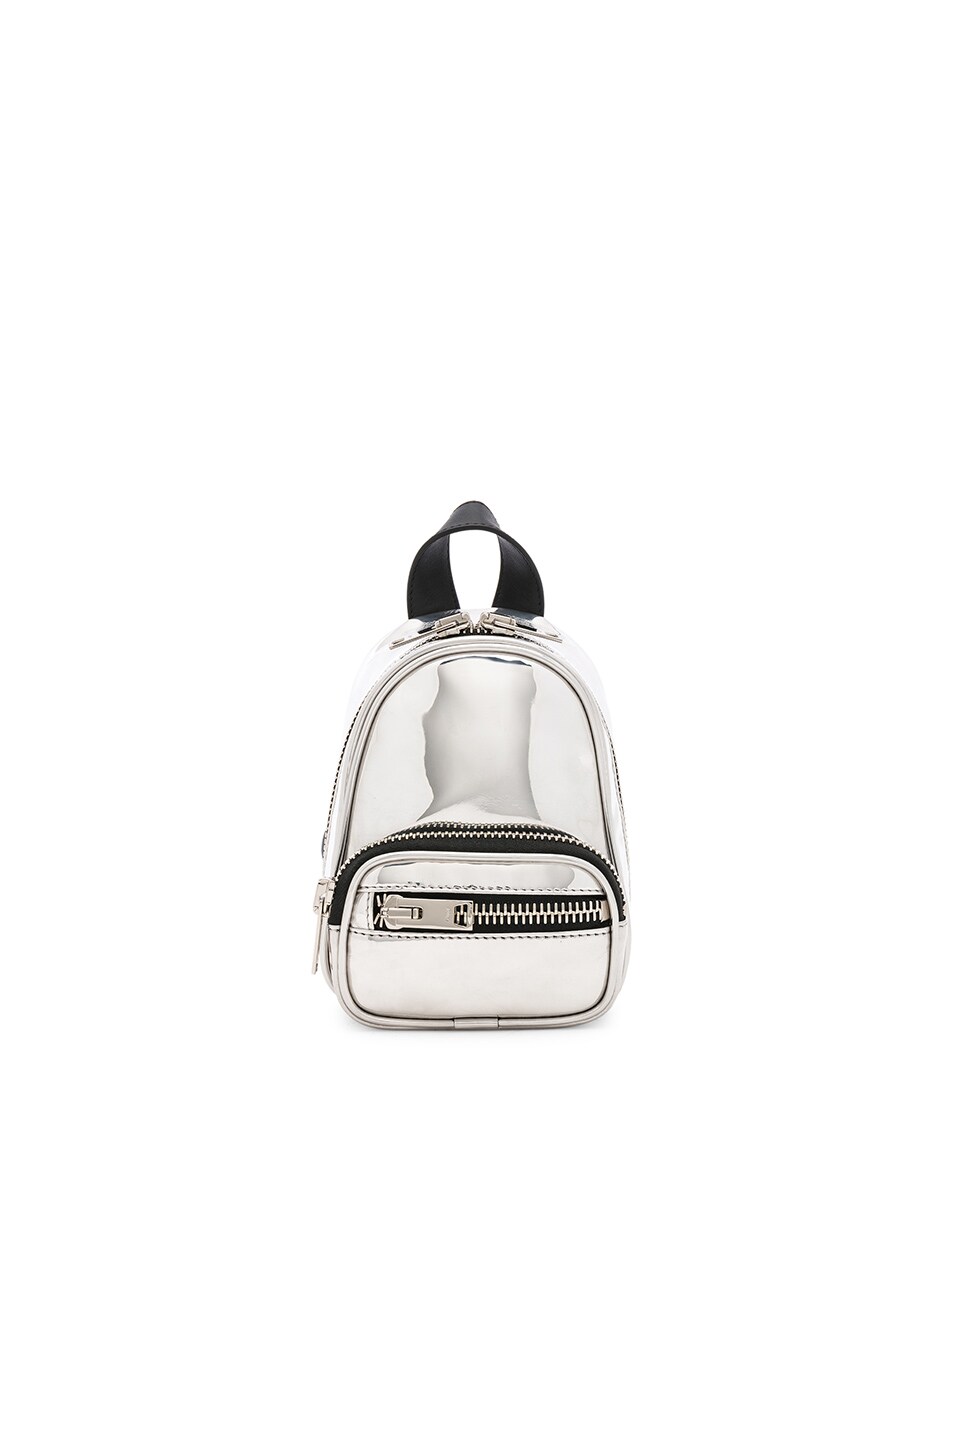 Alexander Wang Attica Soft Mini Backpack in Silver | FWRD